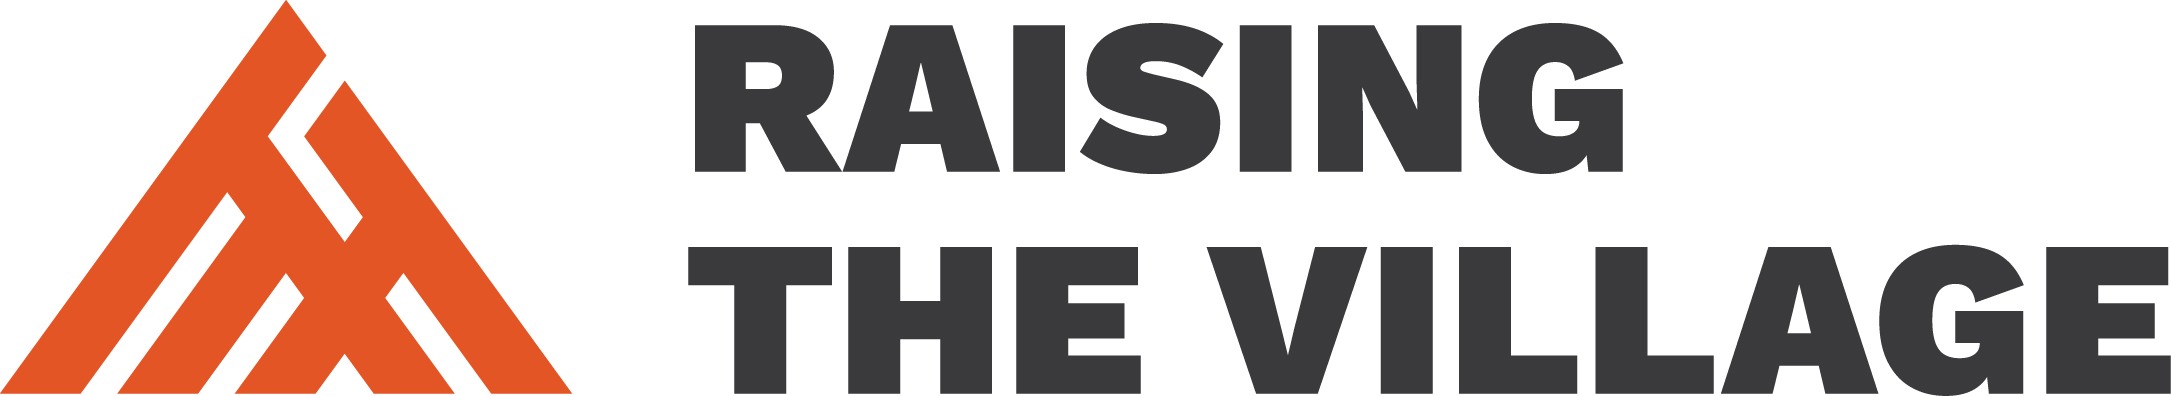 Raising The Village logo